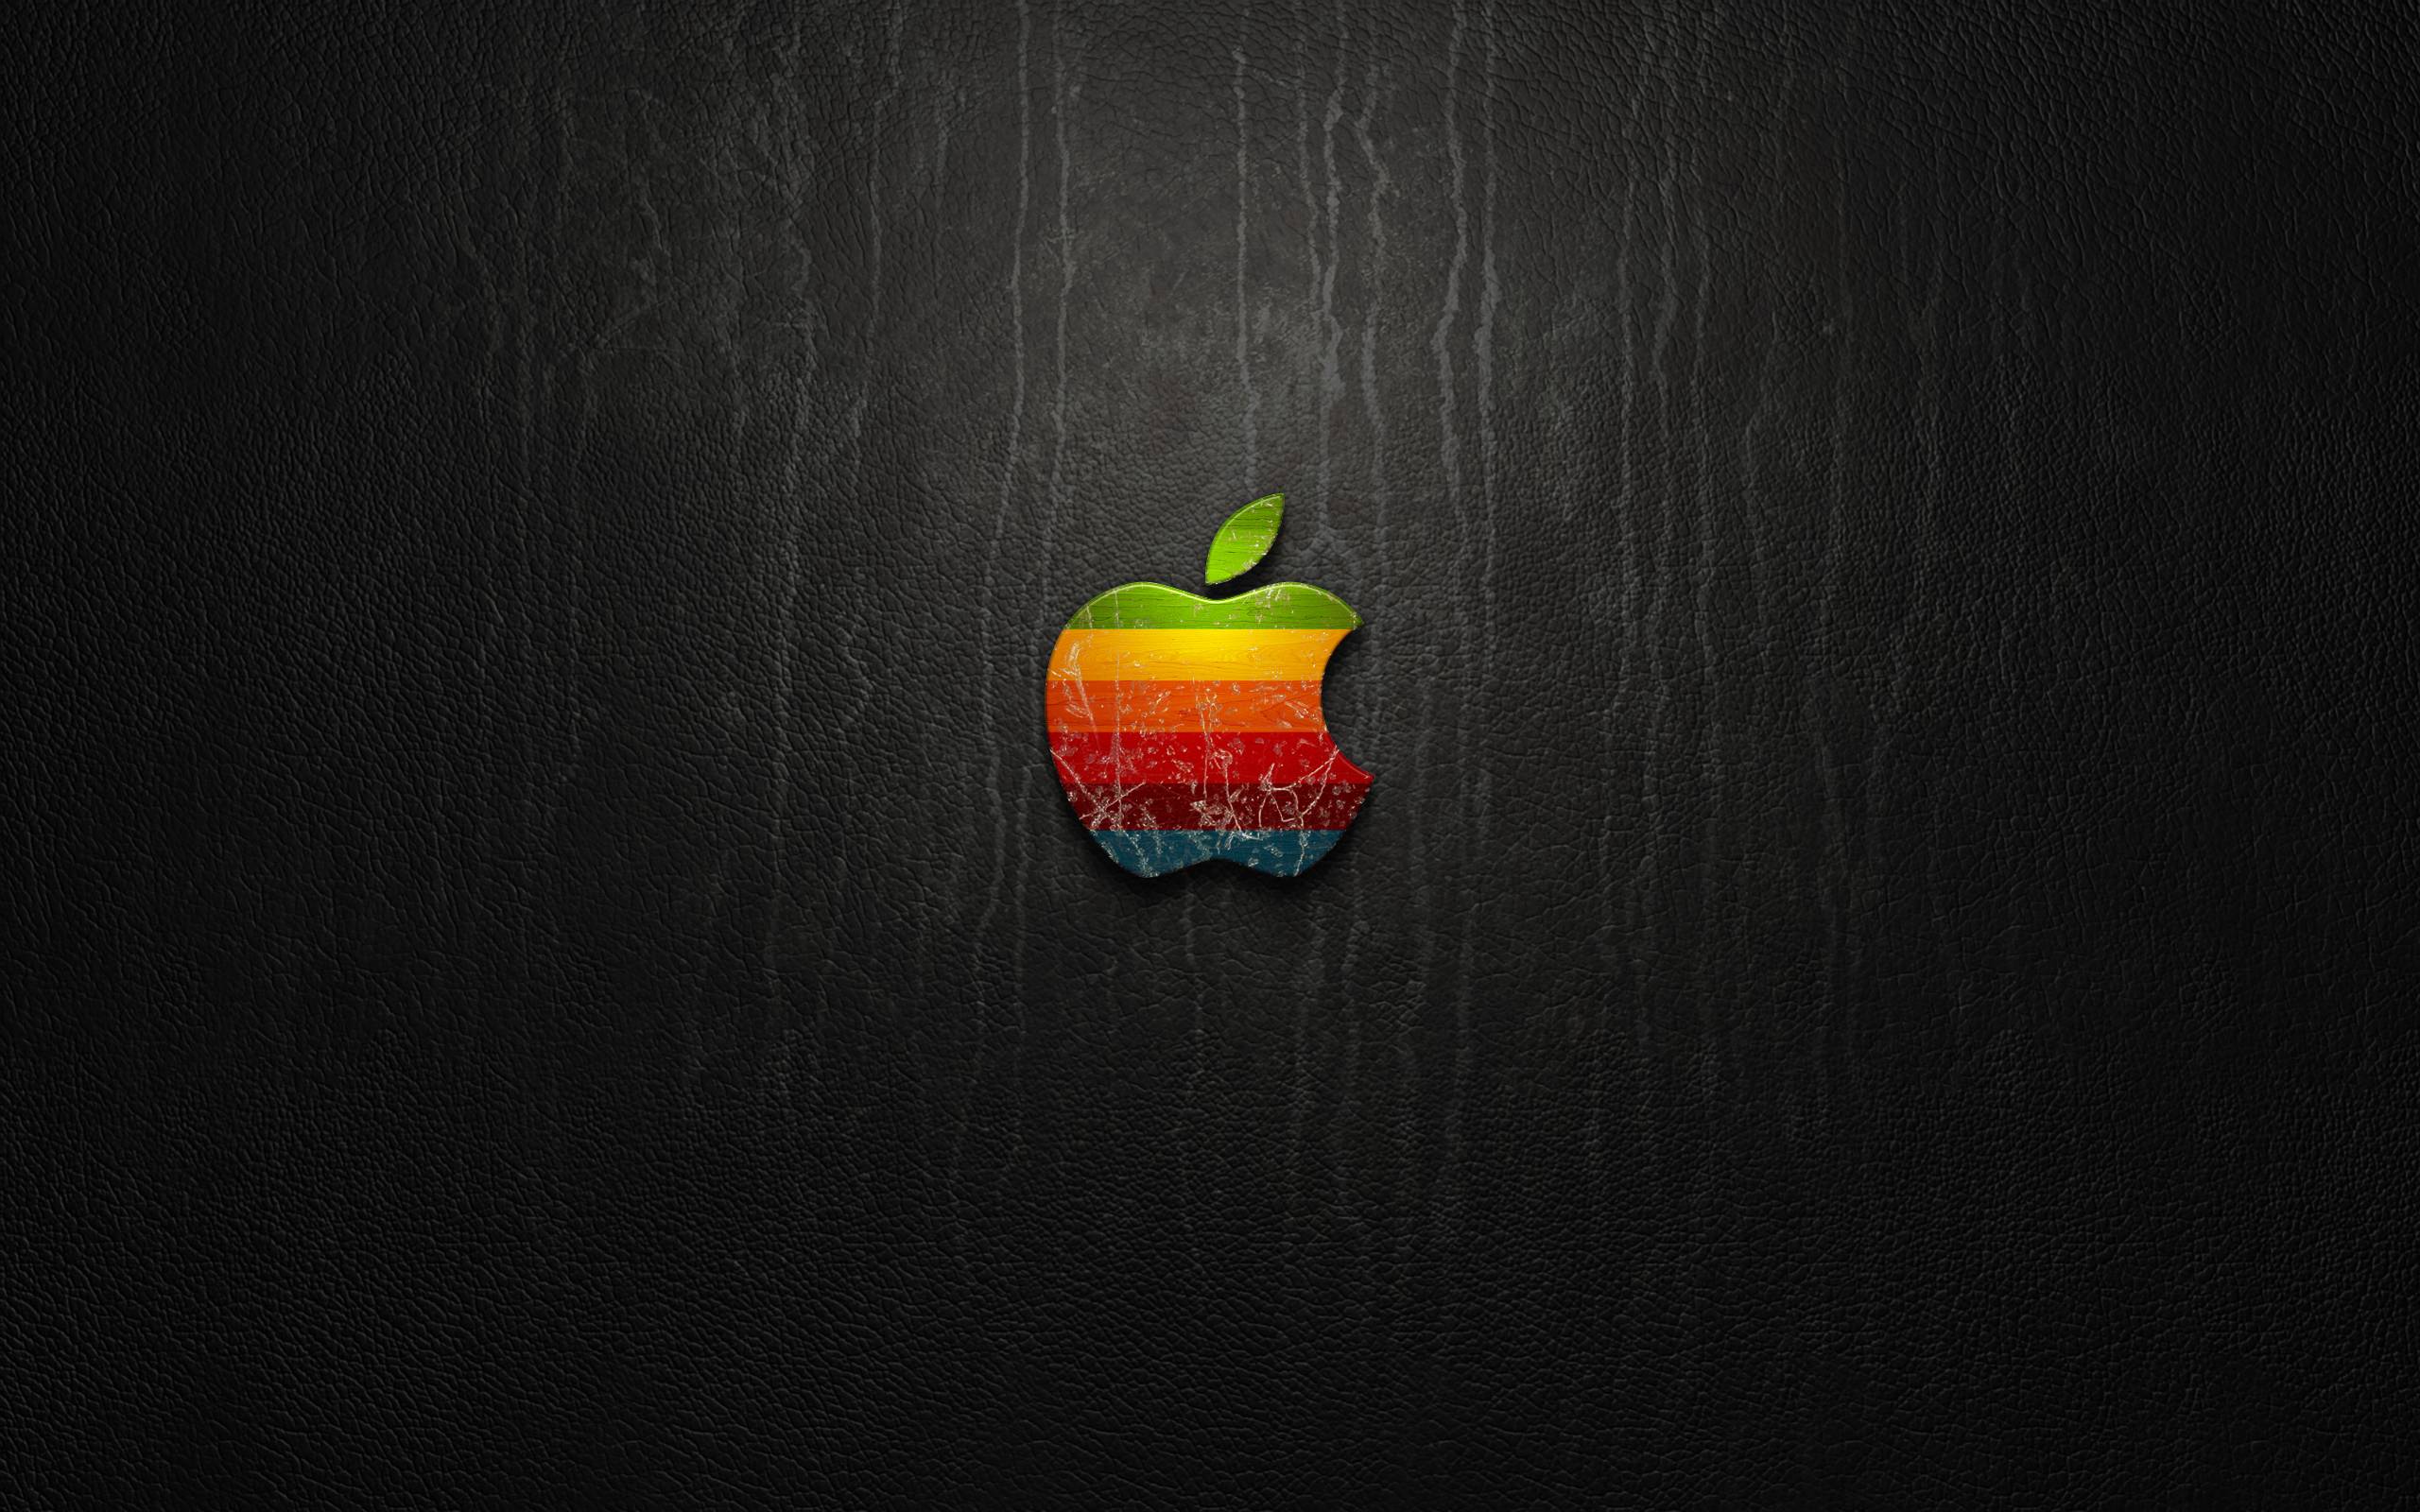 Windows Logo Wallpaper. Apple Logo Wallpaper. Other Brands